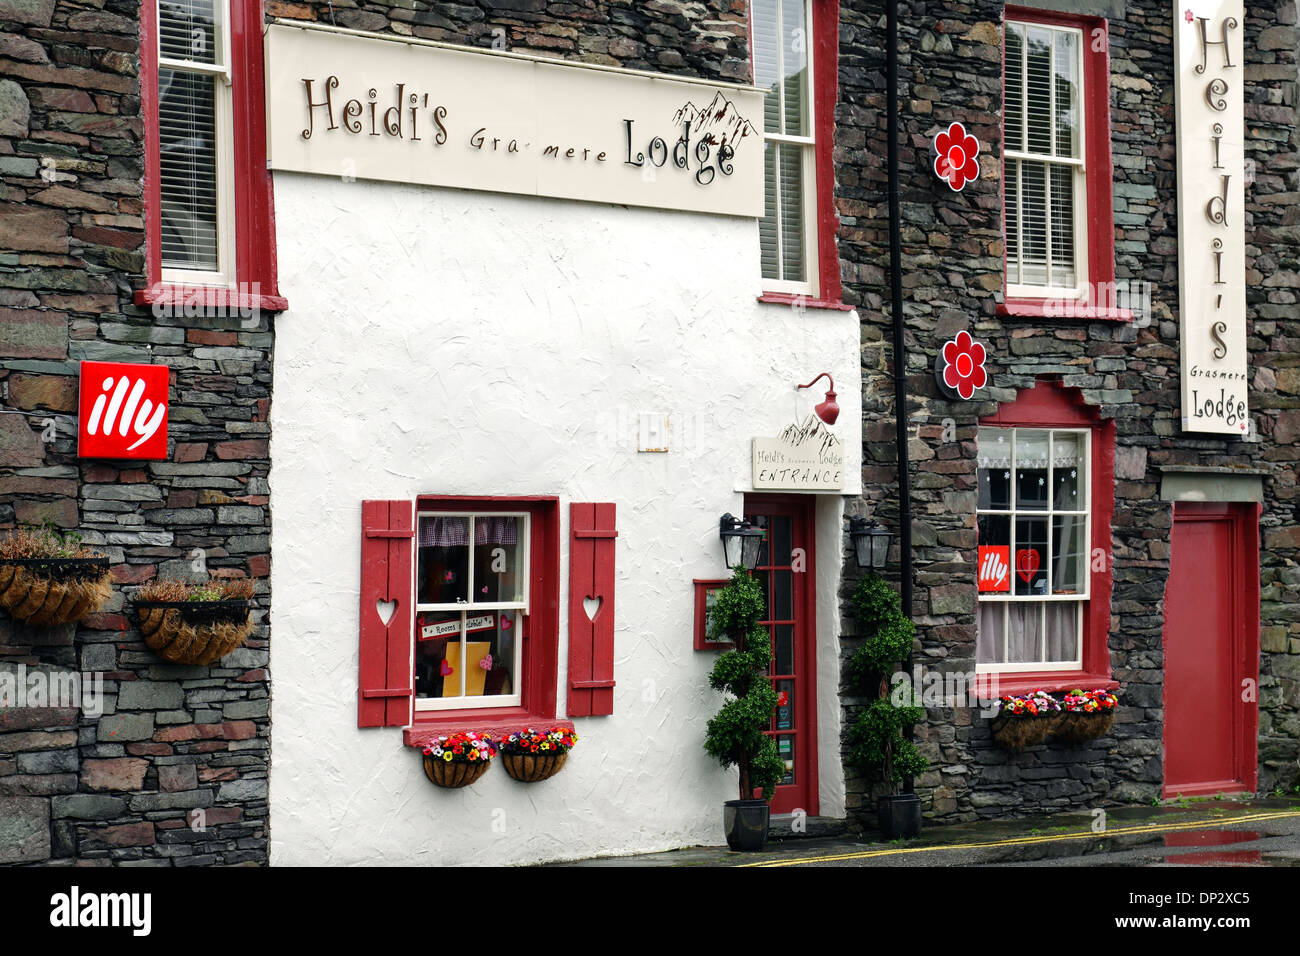 Heidi's Grasmere Lodge Hotel in the village of Grasmere, the Lake District, Cumbria, England, UK Stock Photo